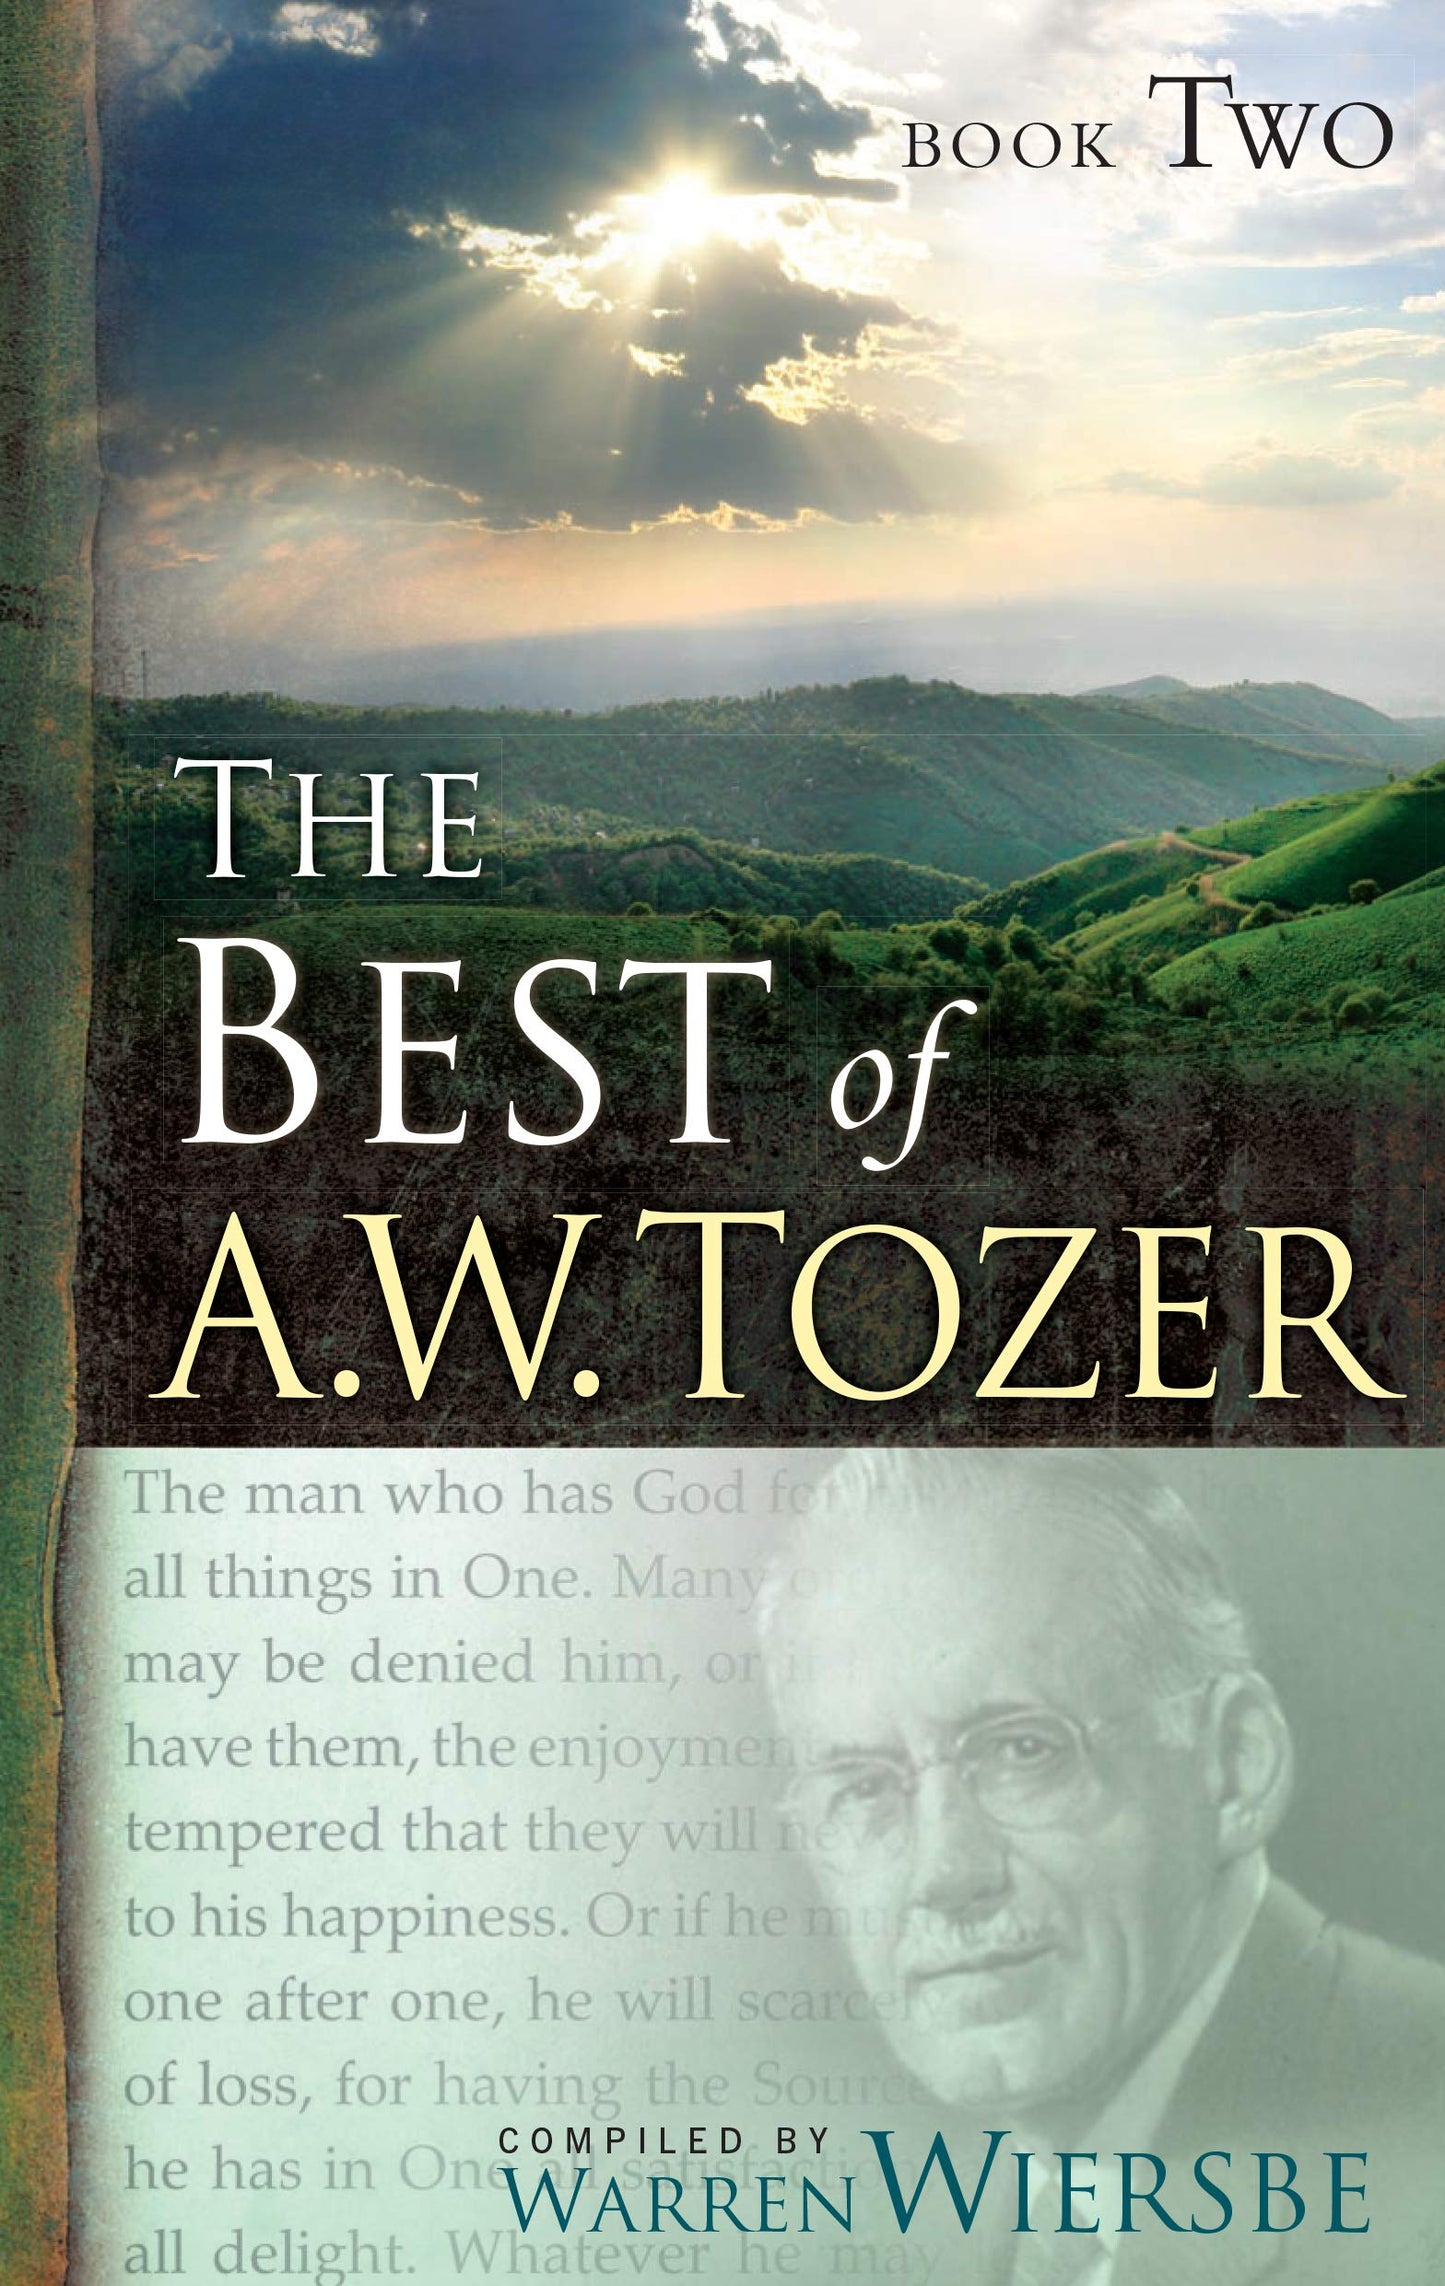 Lo mejor de AW Tozer, Libro 2